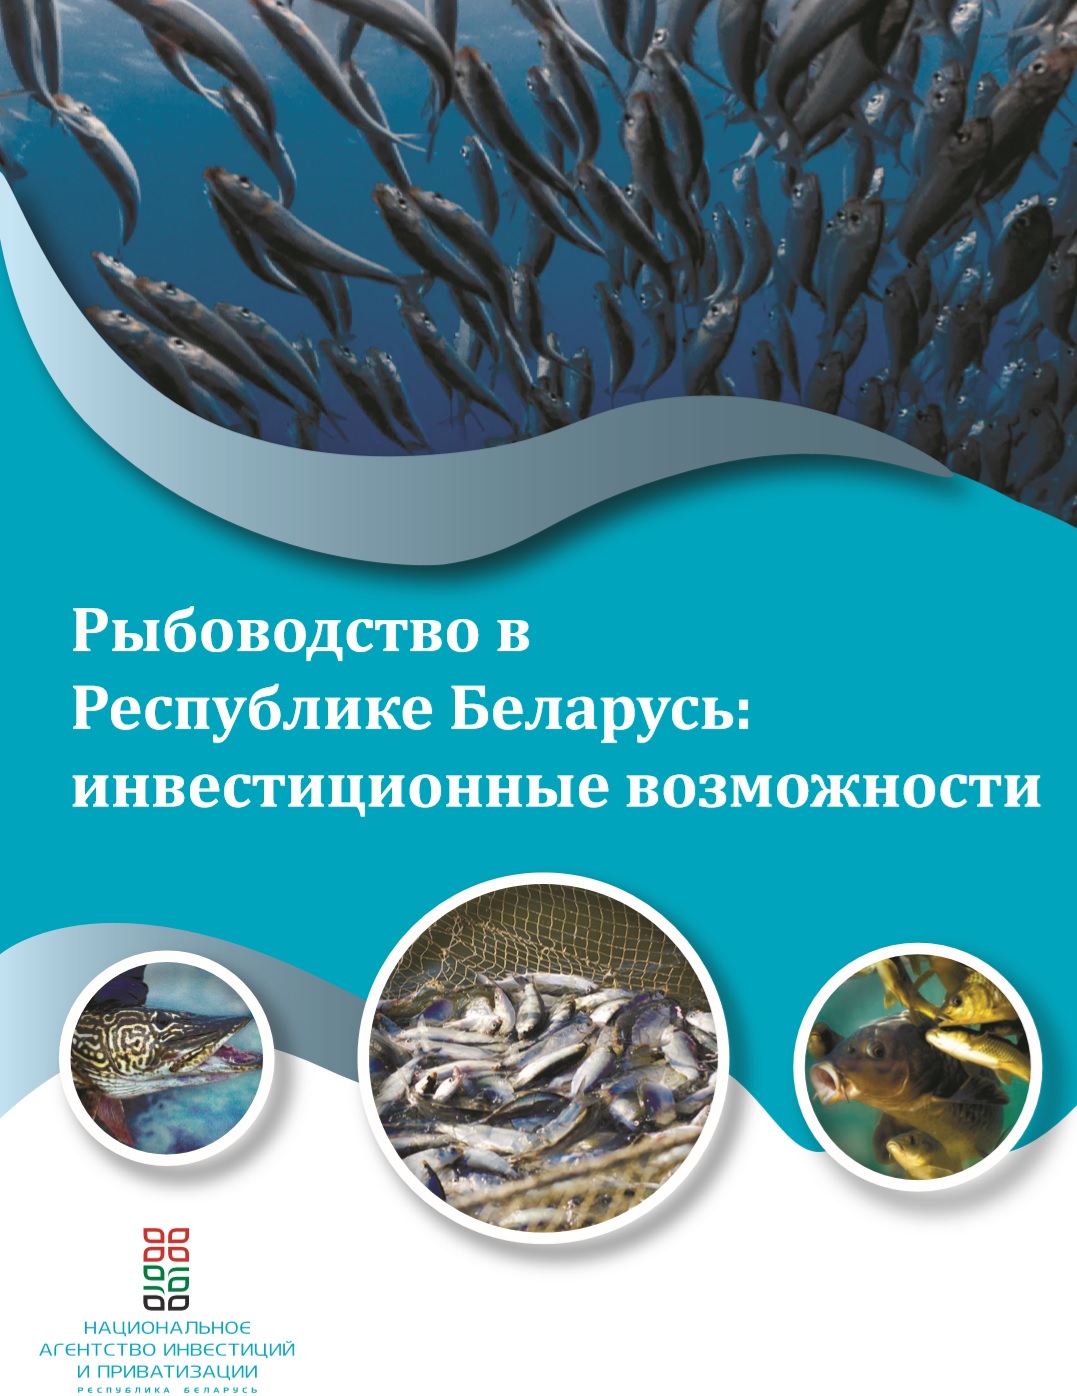 Рыбоводство в Беларуси.jpg